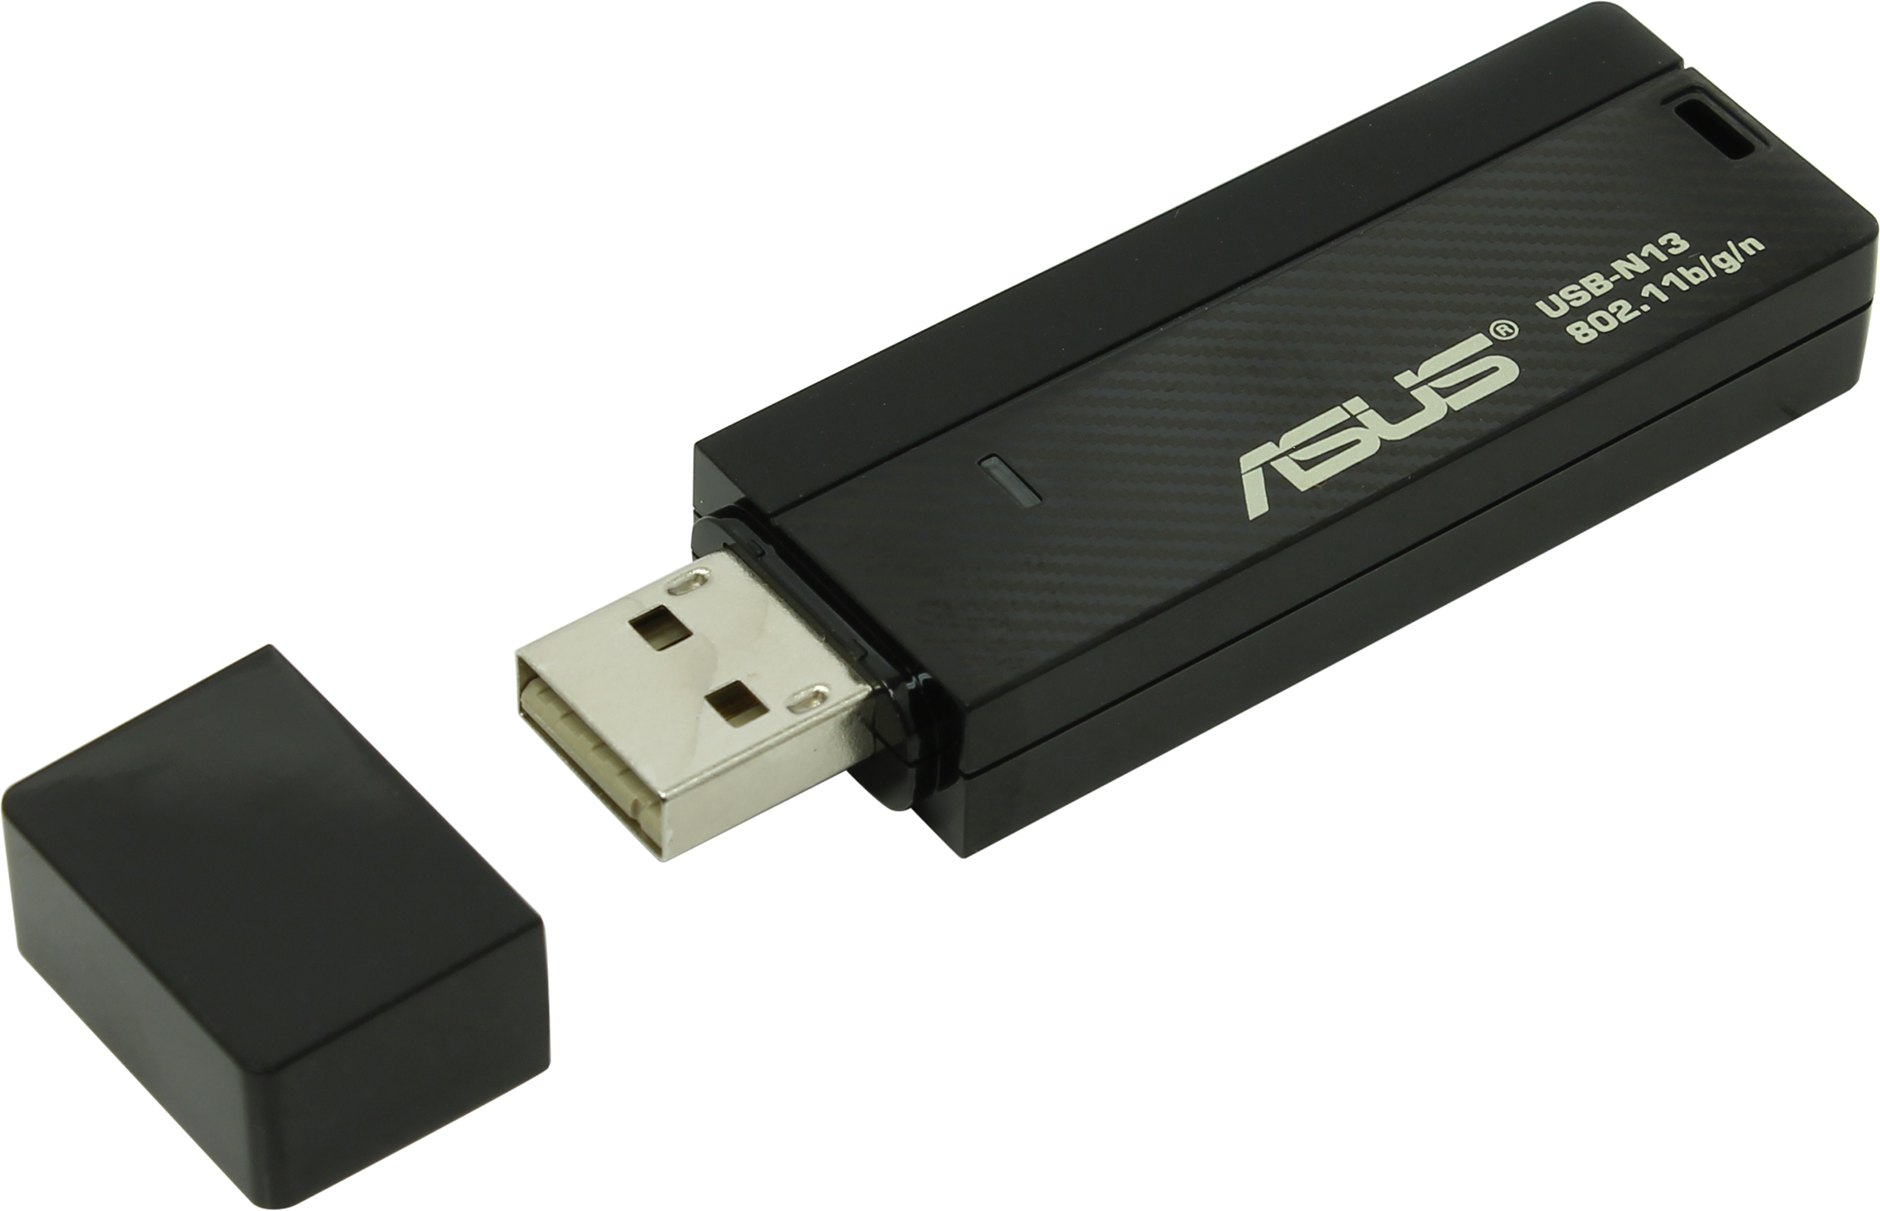 Asus USB-N13 беспроводной адаптер